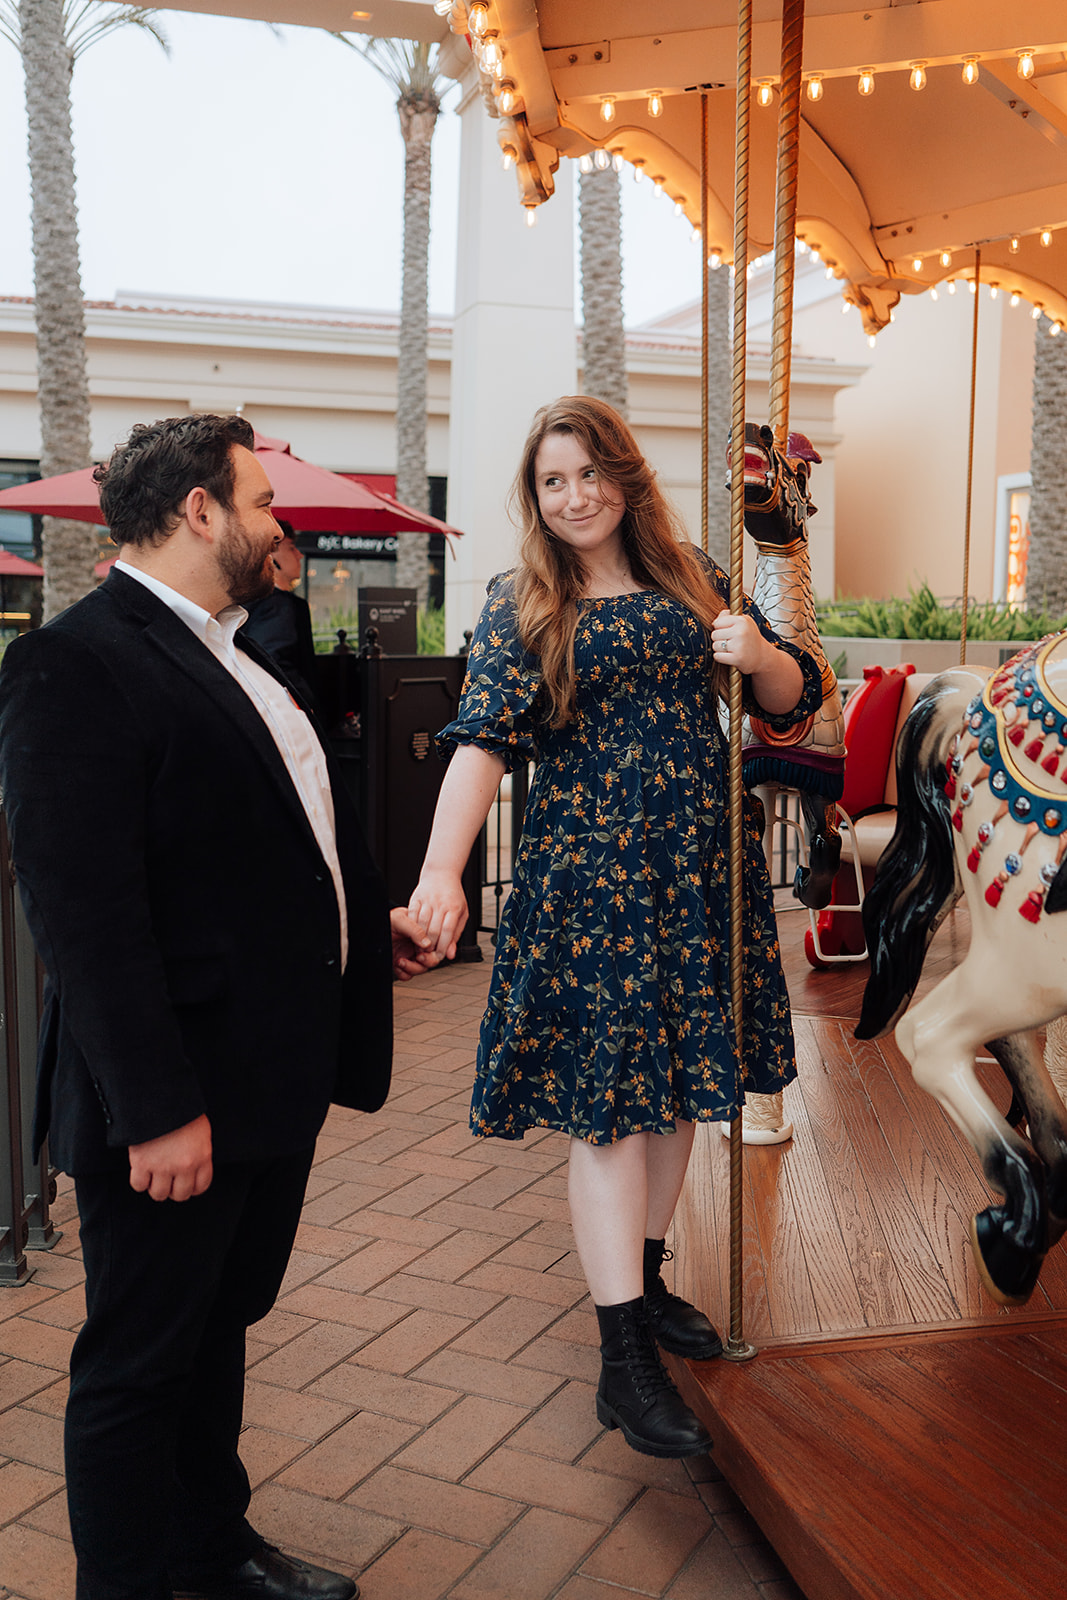 Formal engagement photoshoot couple holding hands Irvine Spectrum Carousel 